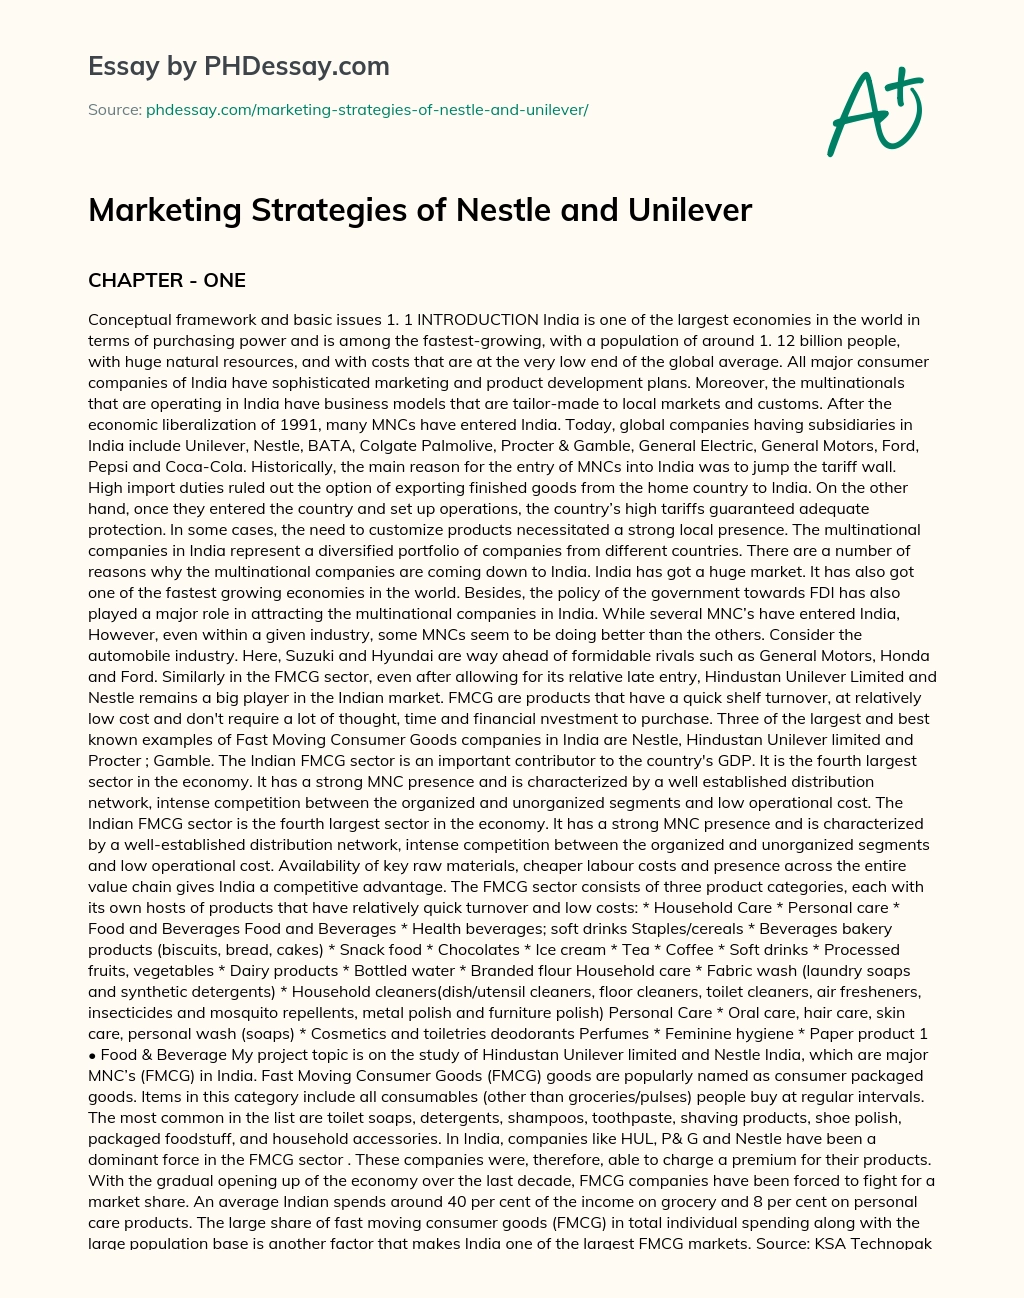 Marketing Strategies of Nestle and Unilever essay